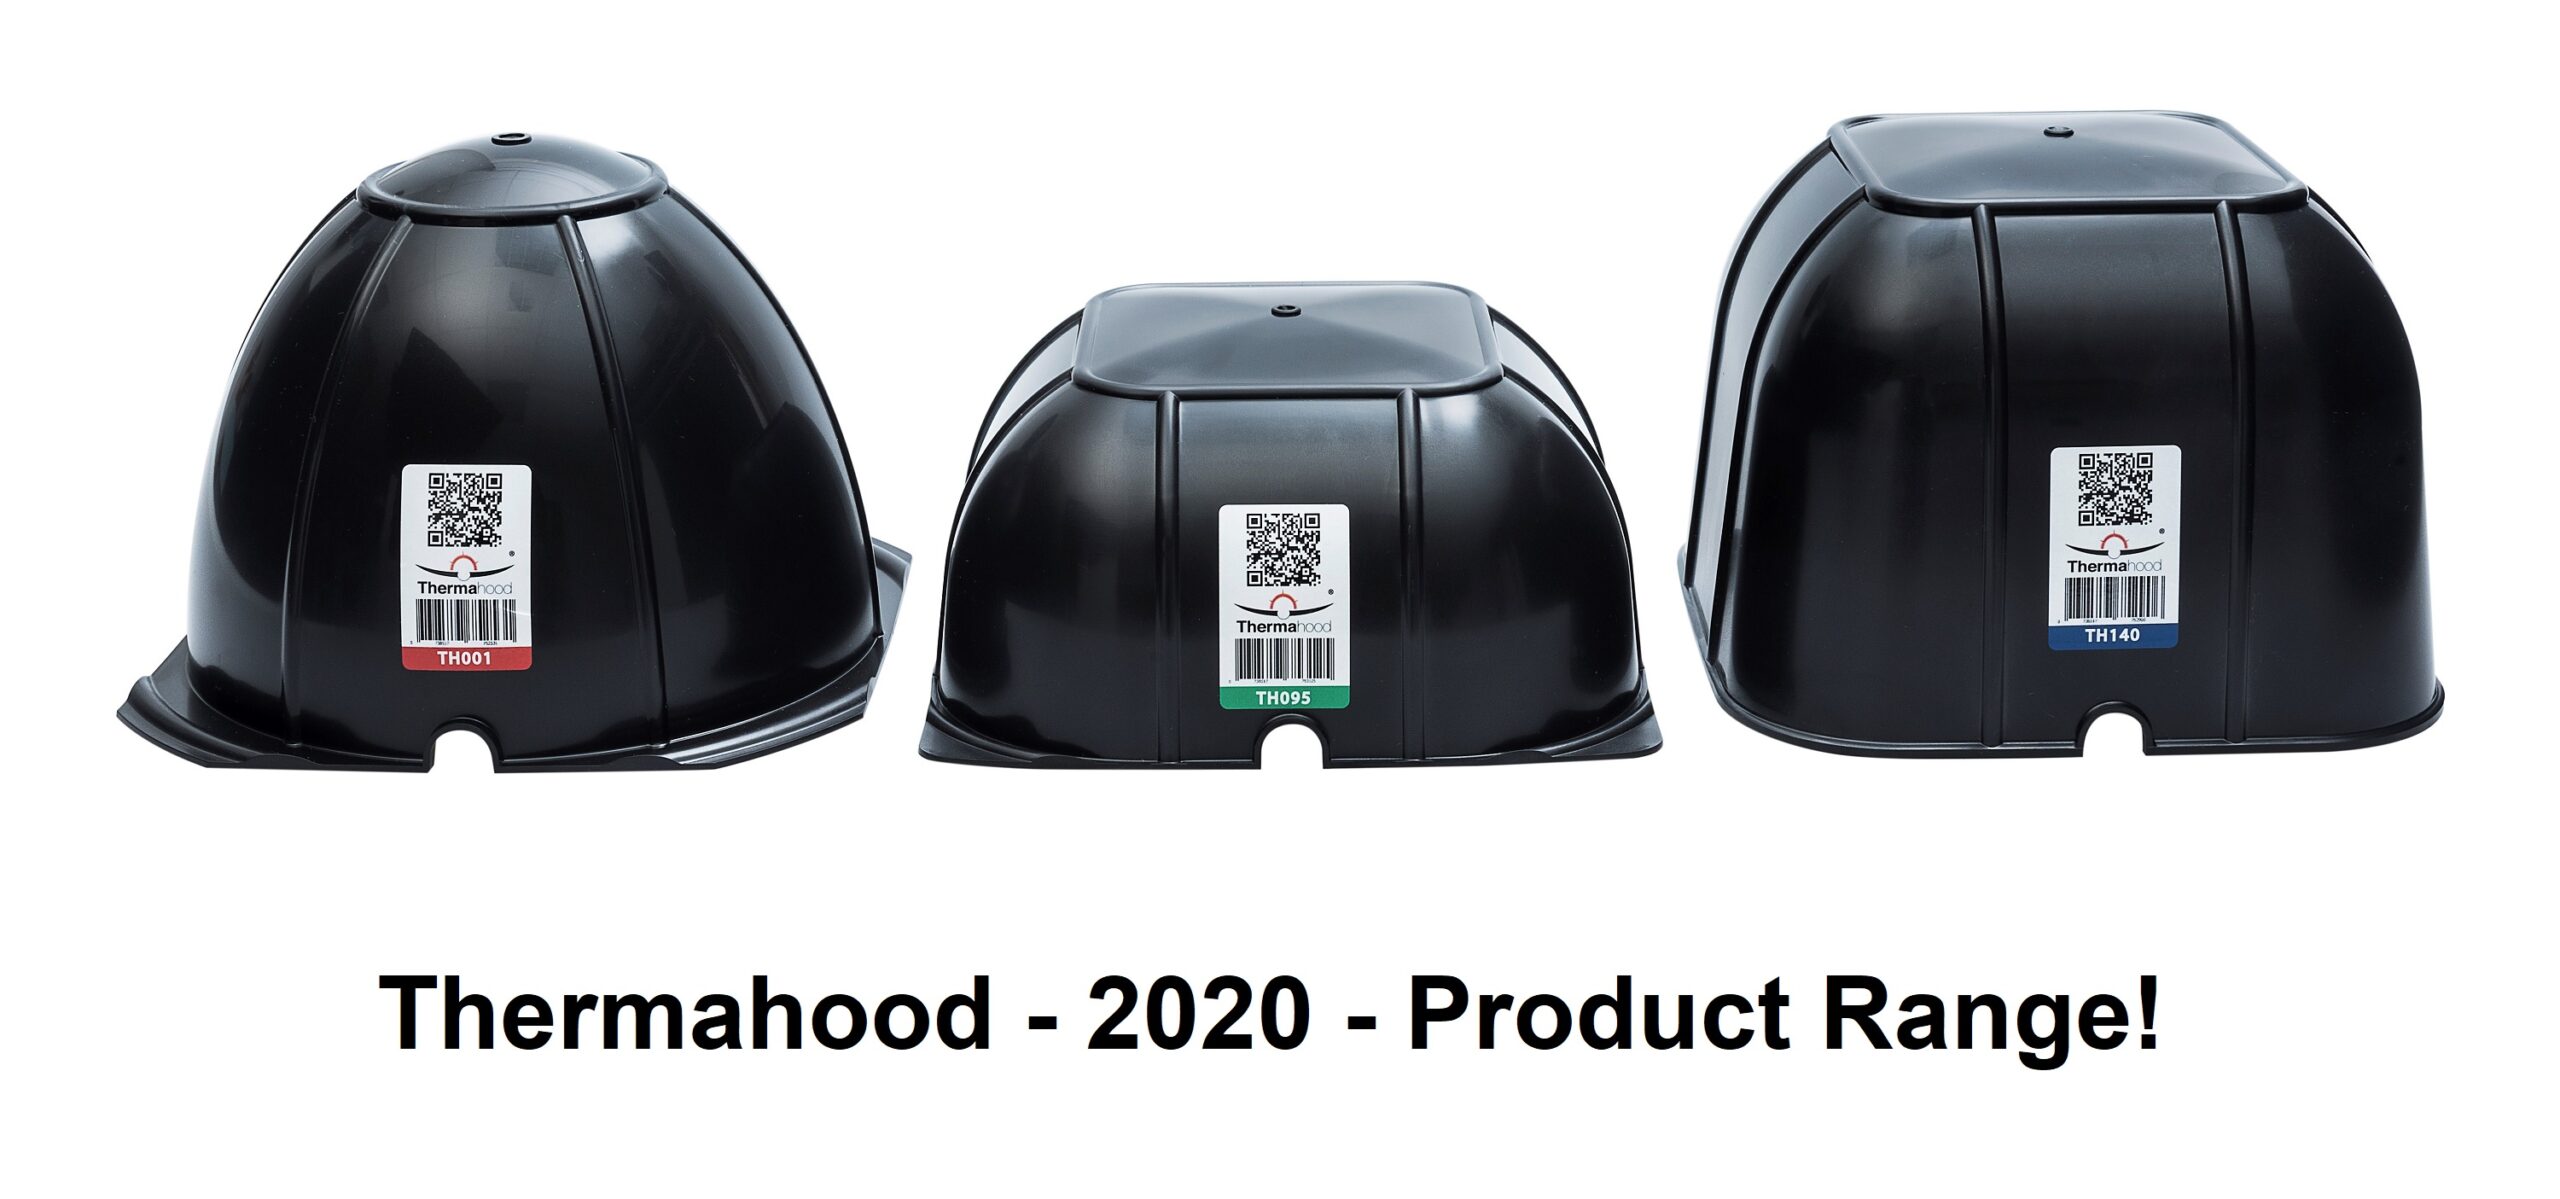 Thermahood - 2020 - Product Range!